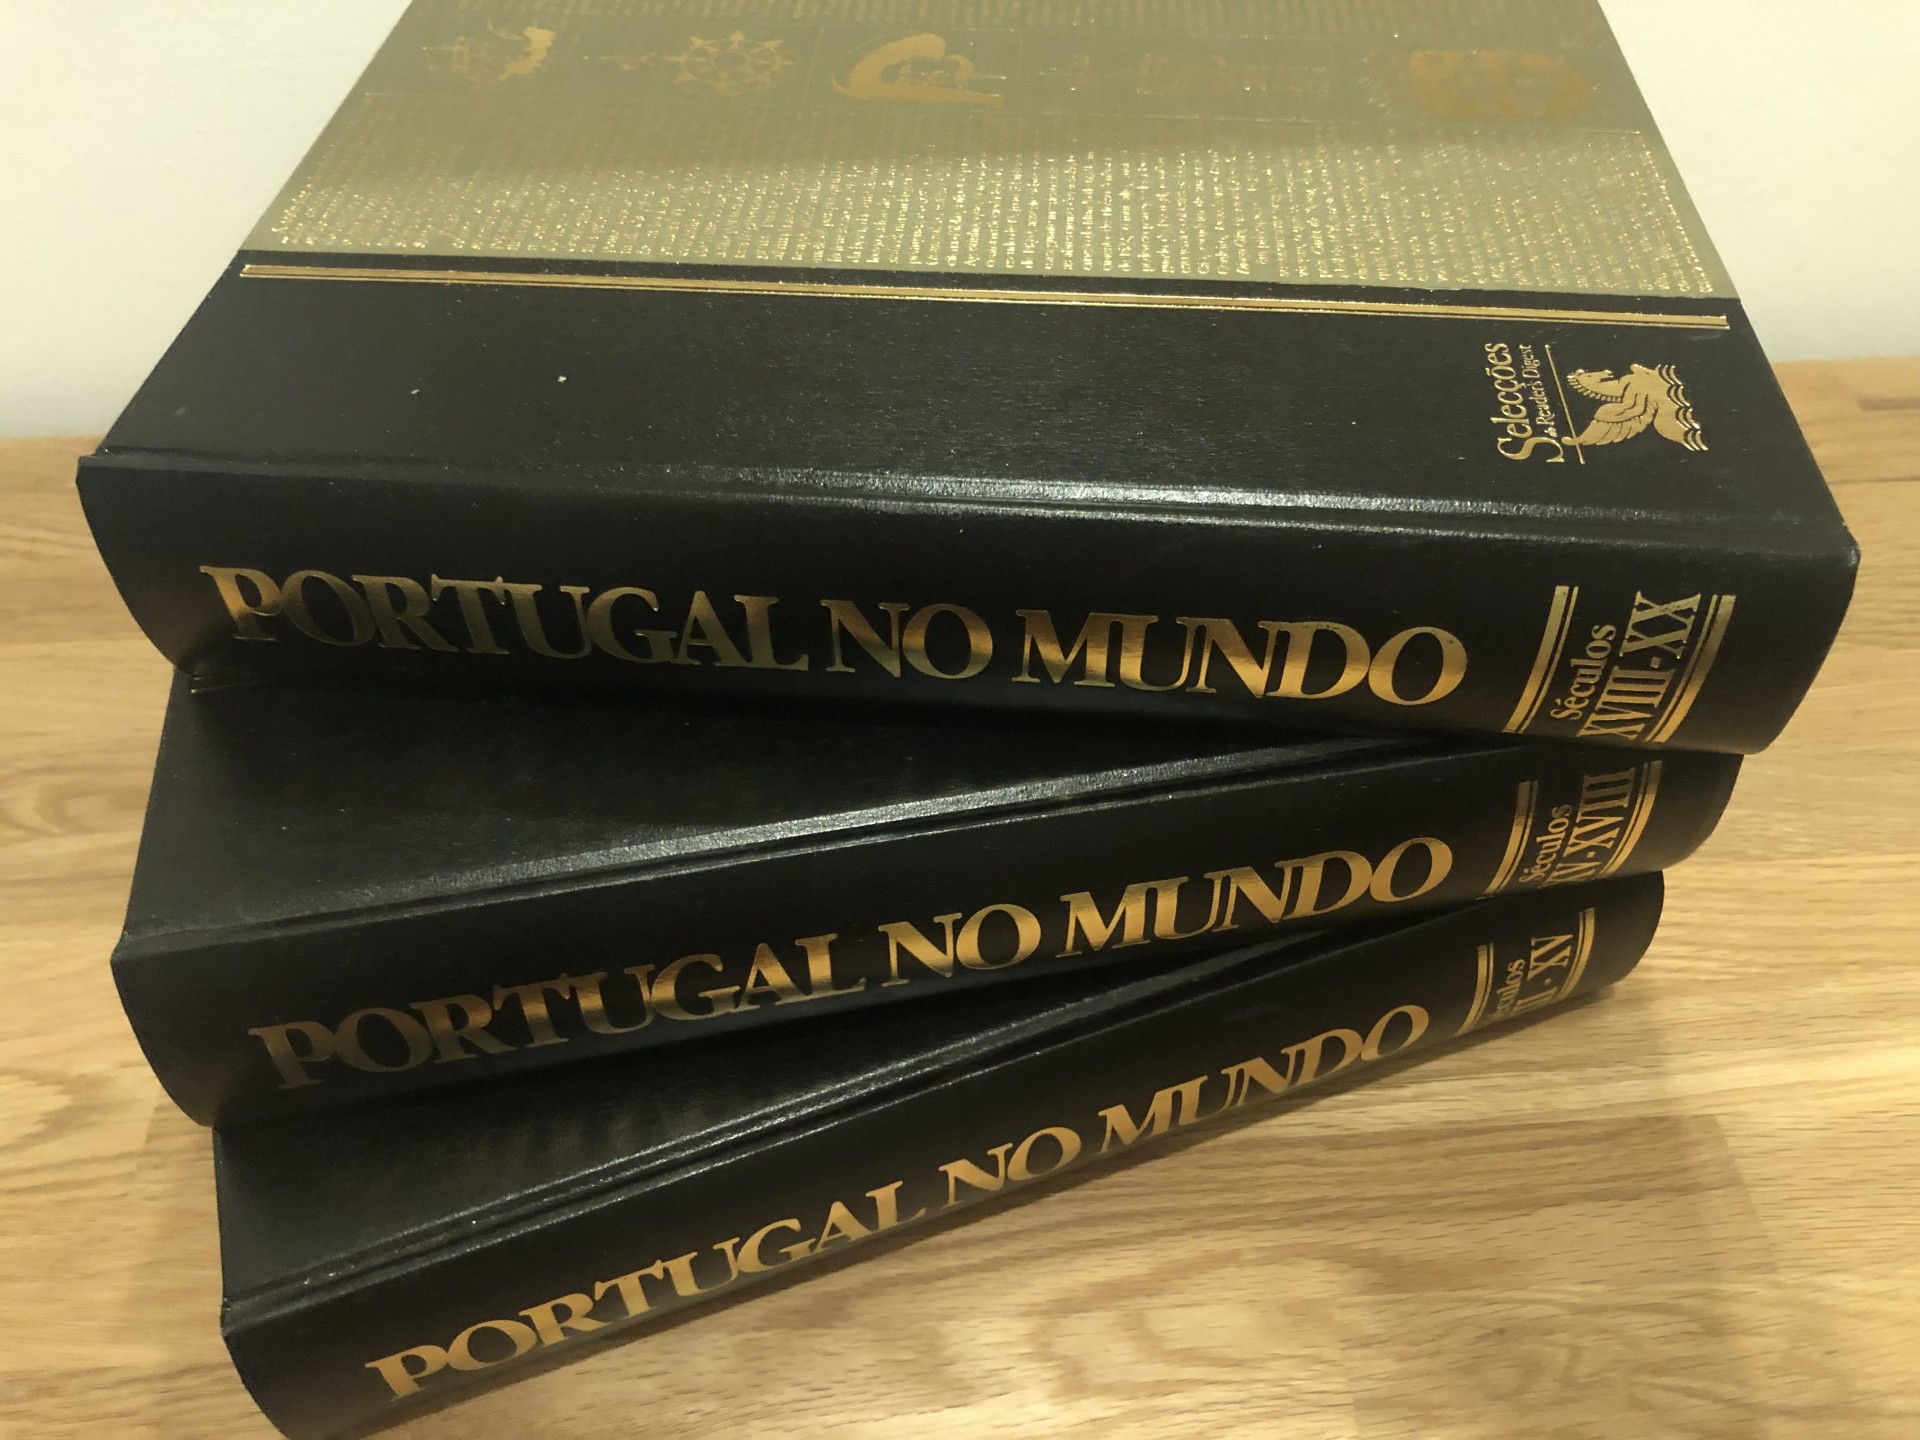 Portugal no Mundo (3 volumes)